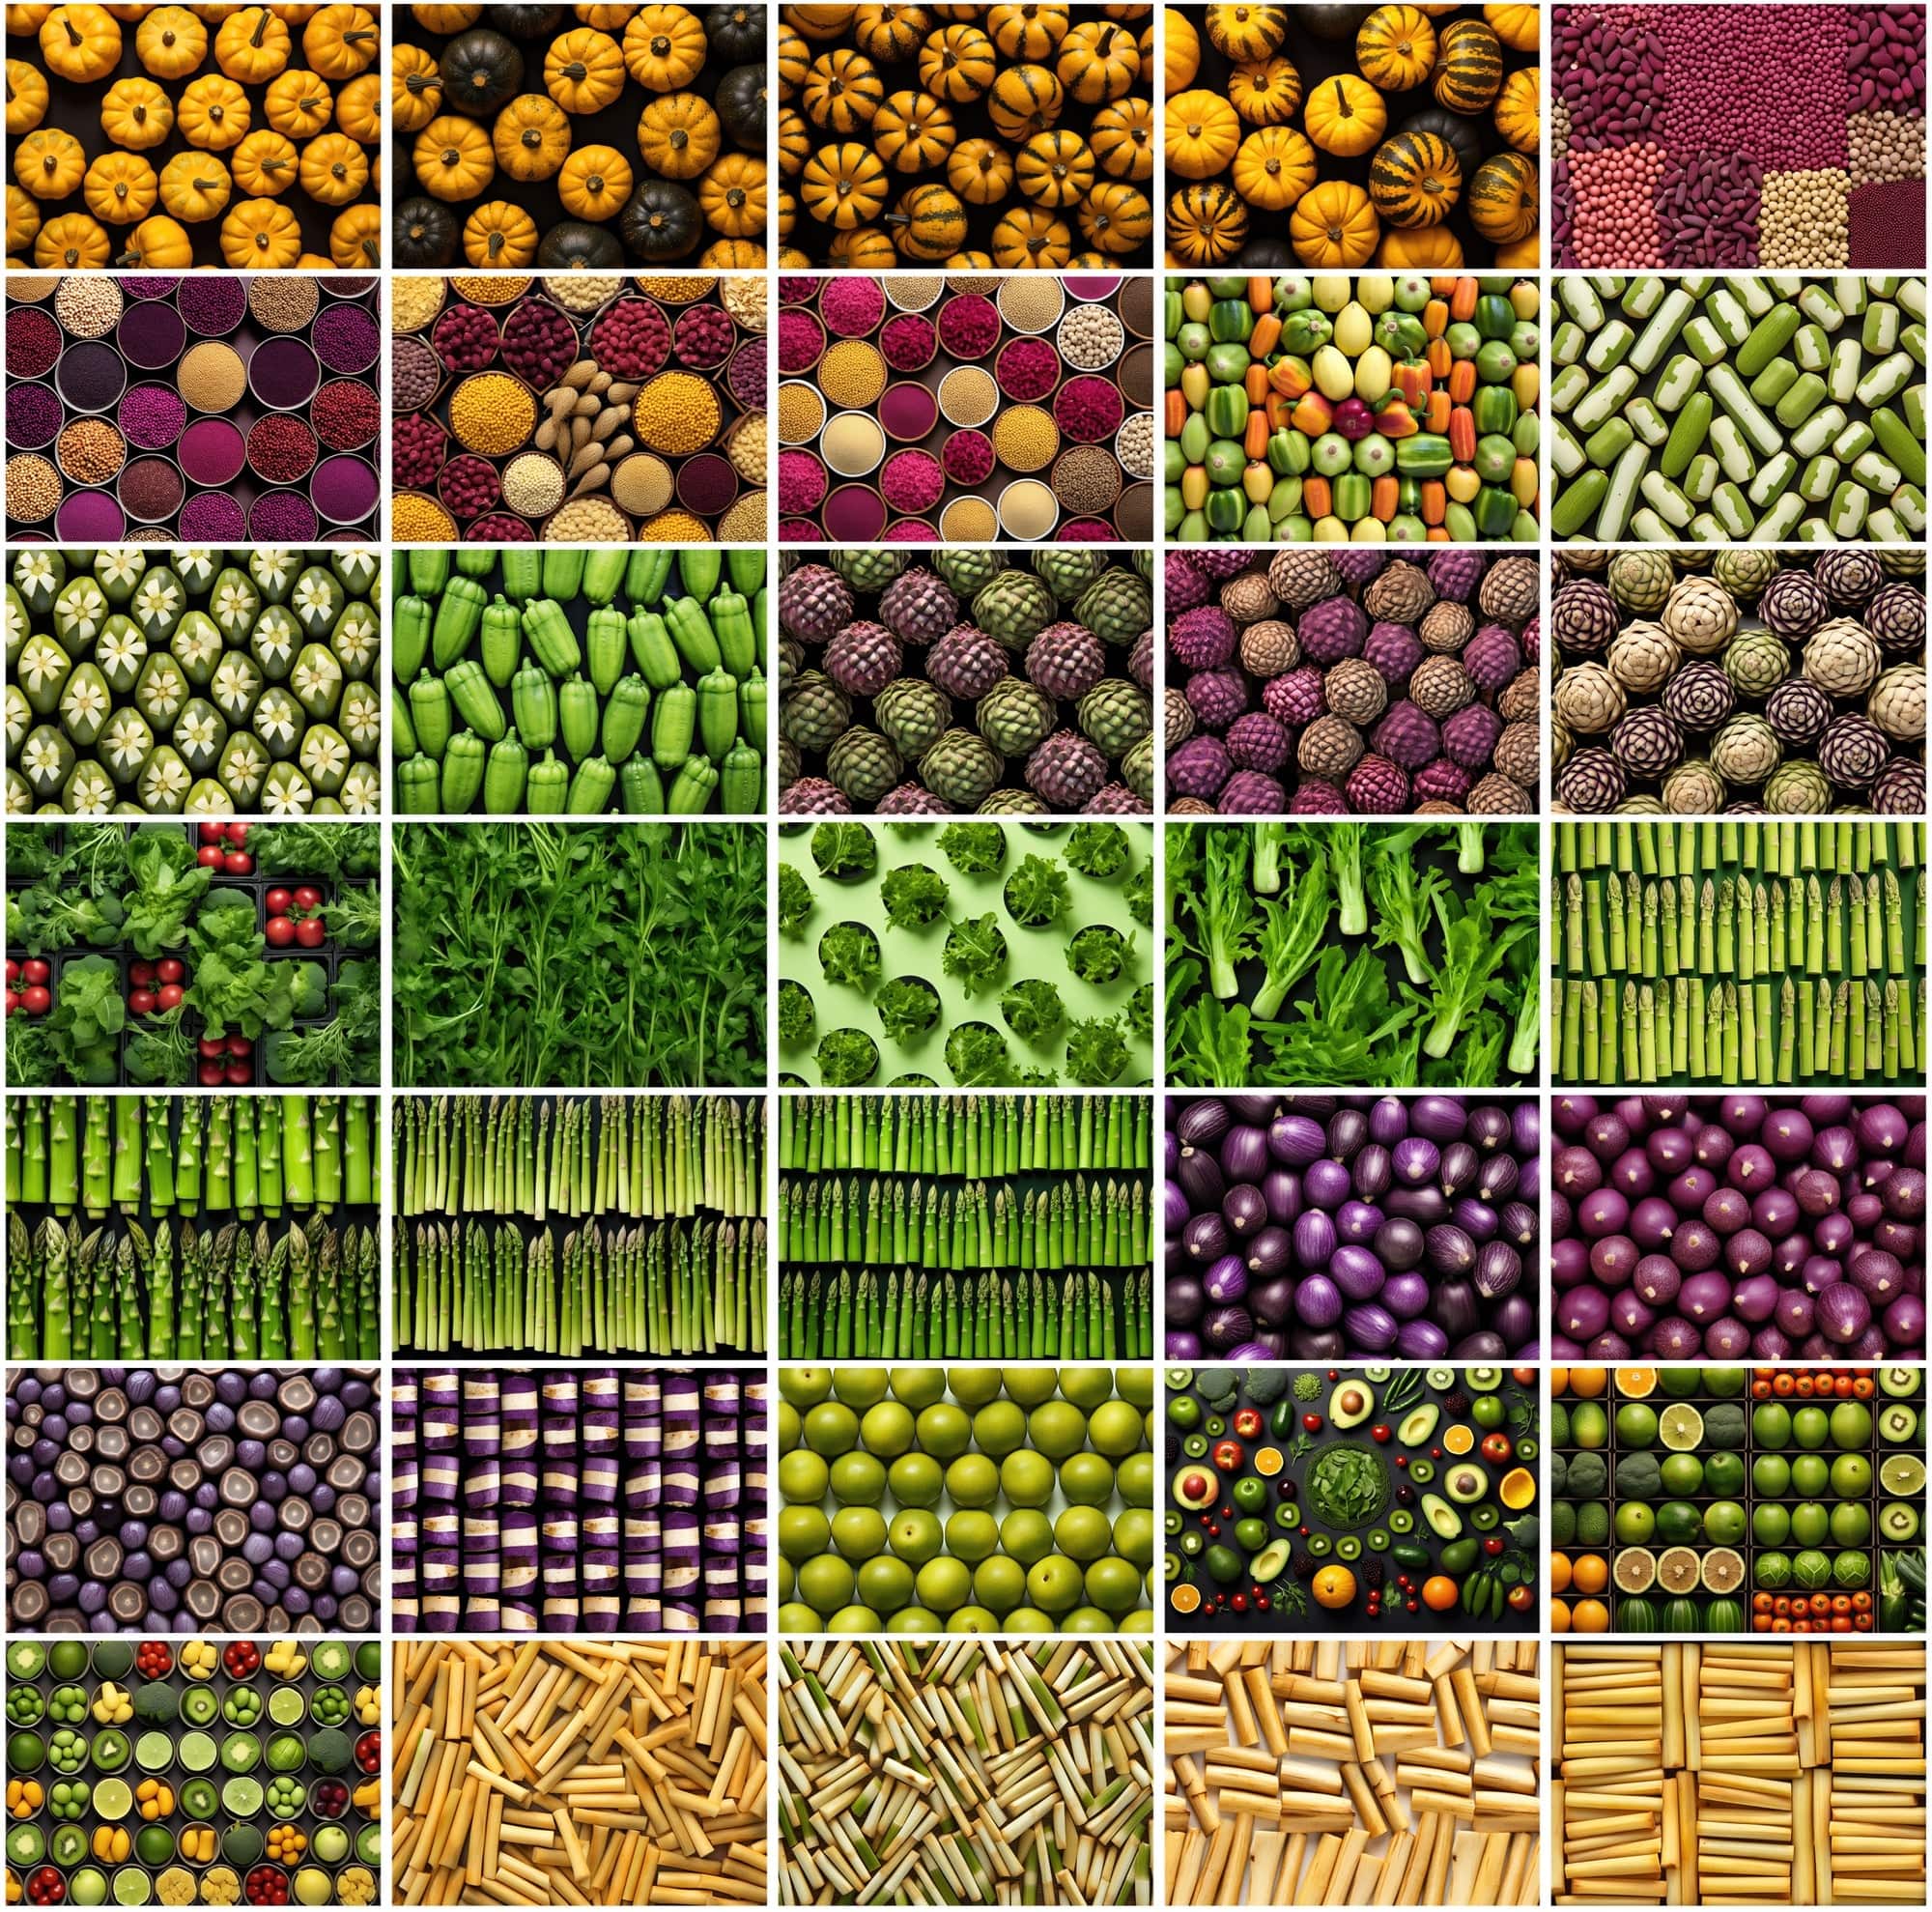 300 Vegetable PNG Images, High-Resolution Veggies Backgrounds, Commercial License Included Digital Download Sumobundle